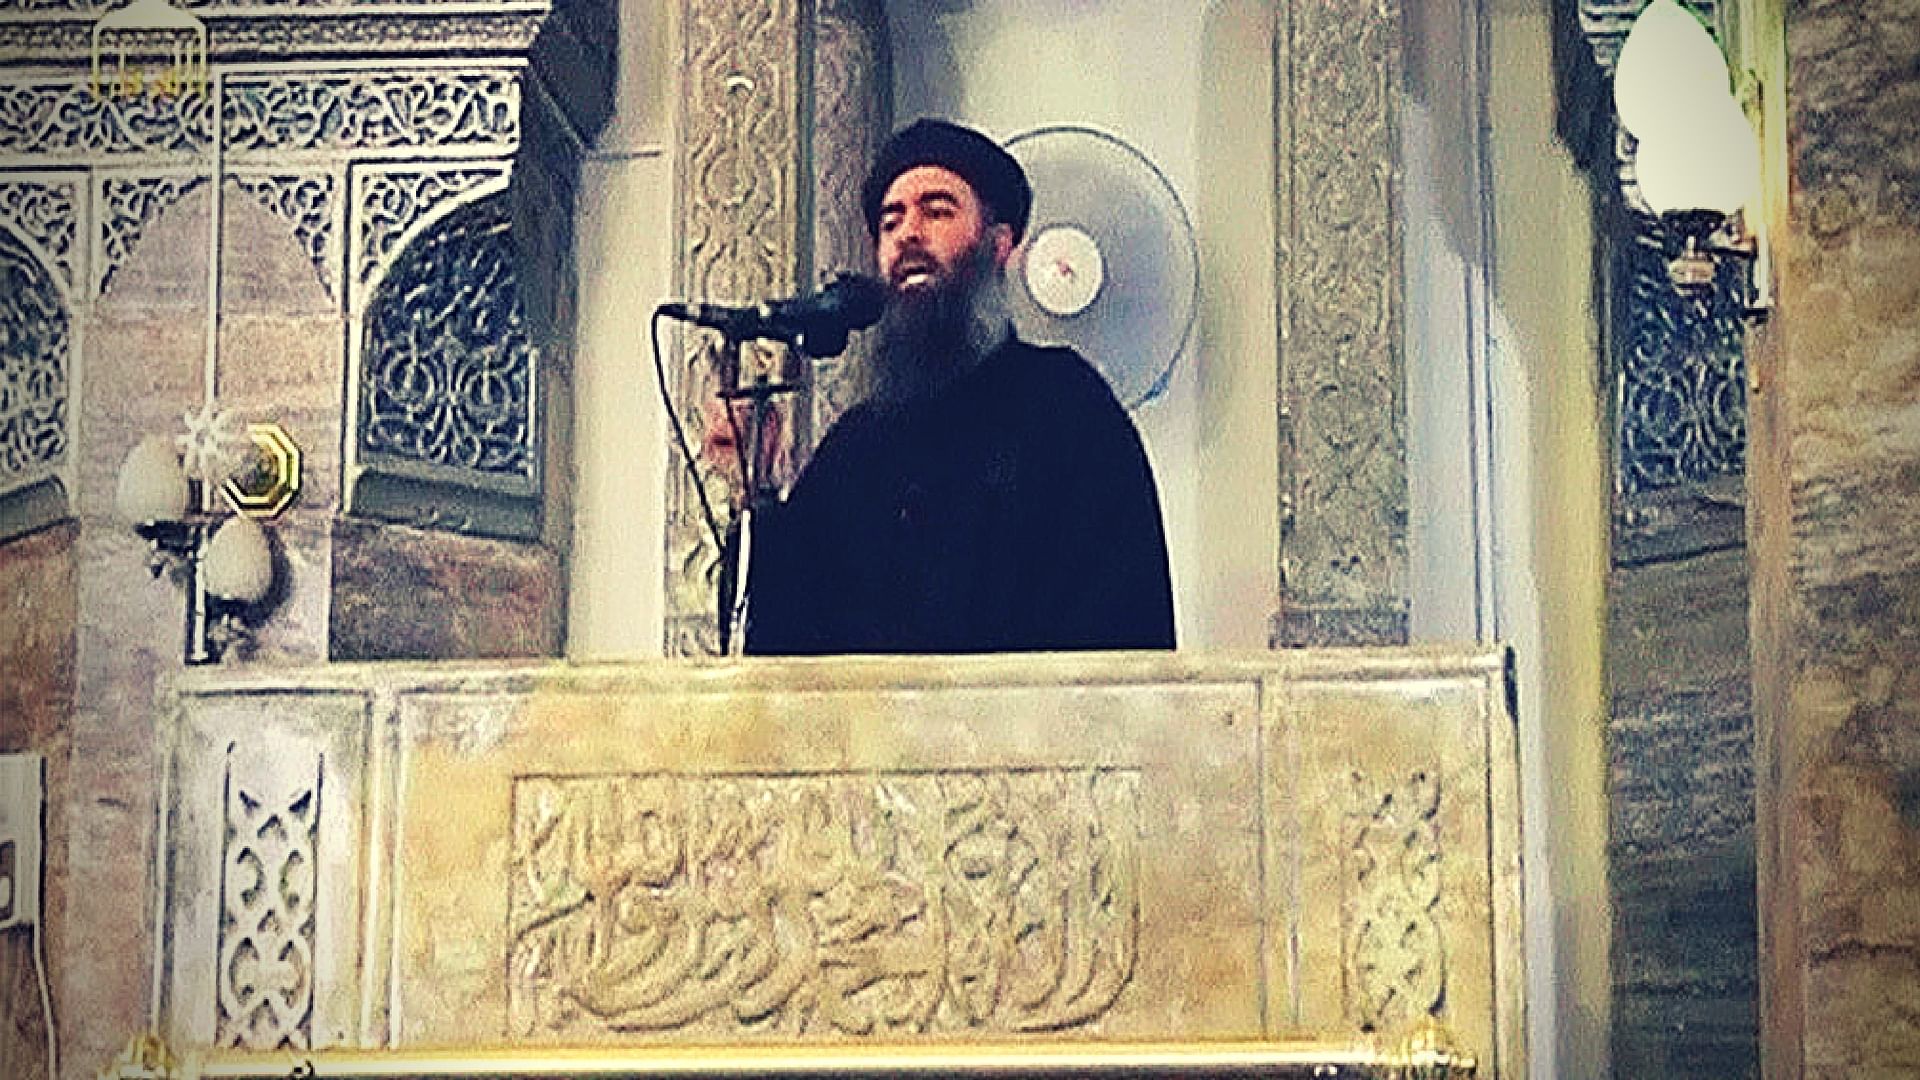 Abu Bakr al-Baghdadi, the chief of Islamic State delivering a sermon. (Photo: Reuters)